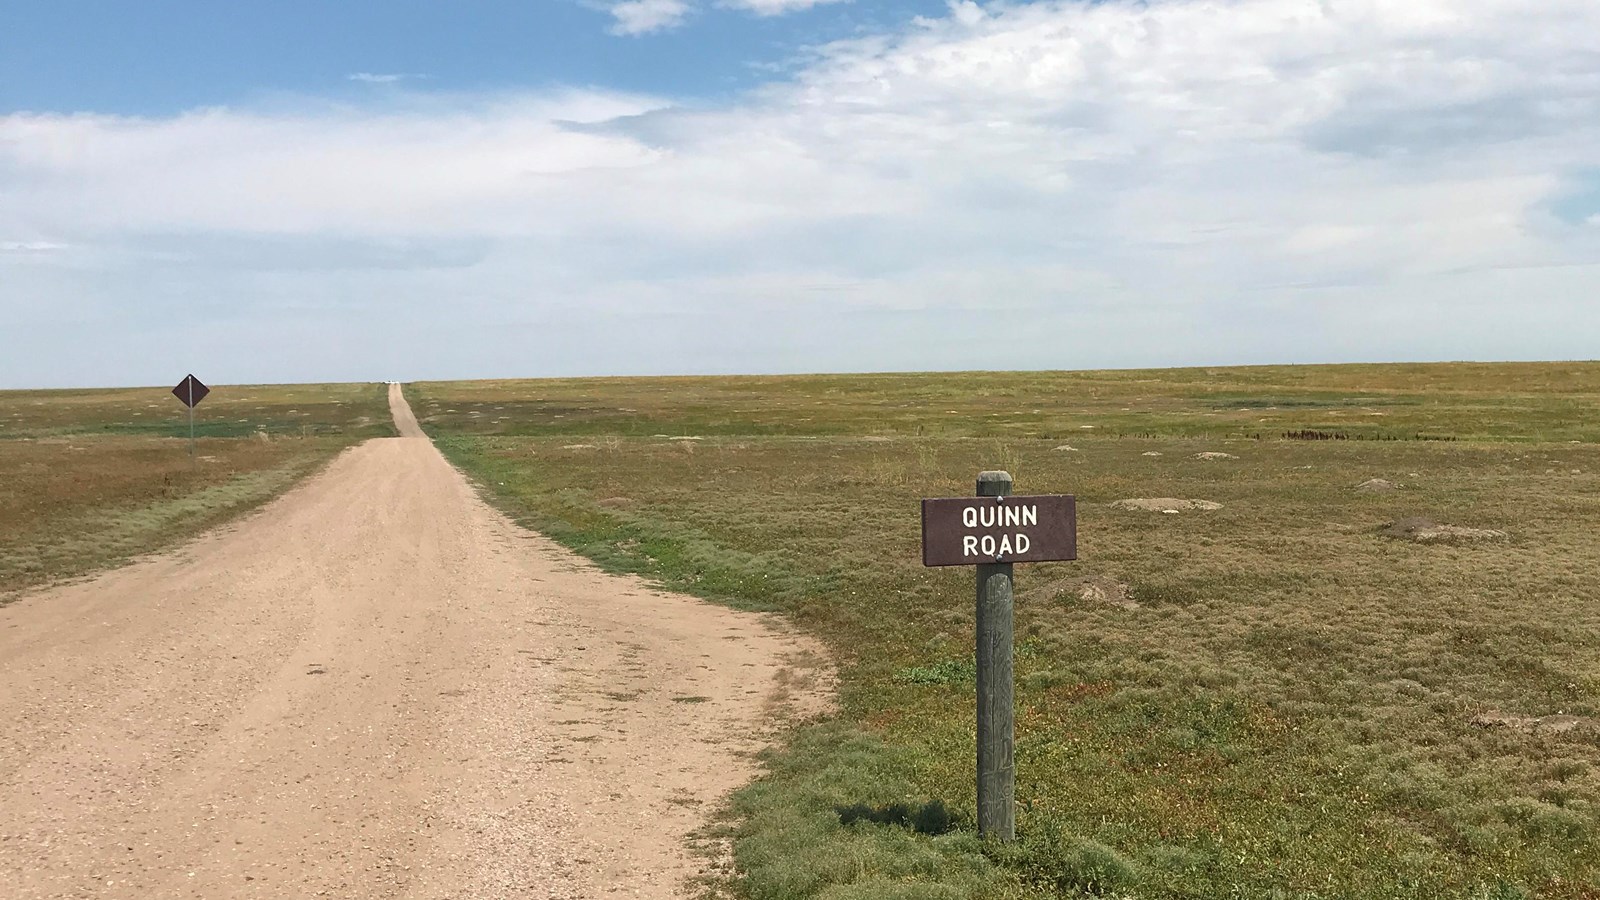 Winding dirt road alongside flat green grassy field under blue sky. A wooden sign reads 